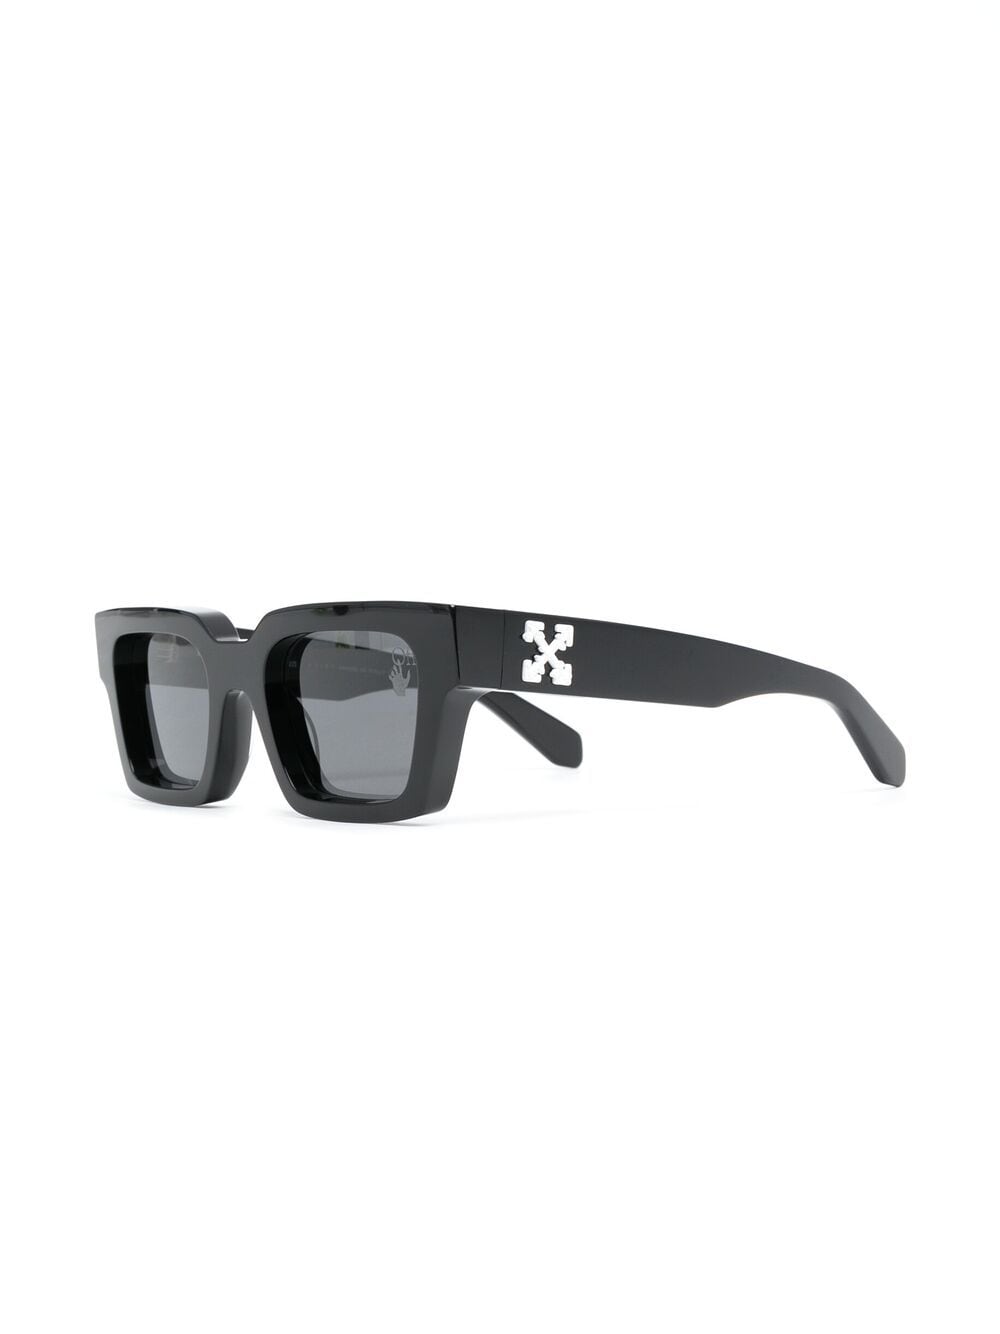 OFF-WHITE Virgil Square Frame Sunglasses Black/White/Grey